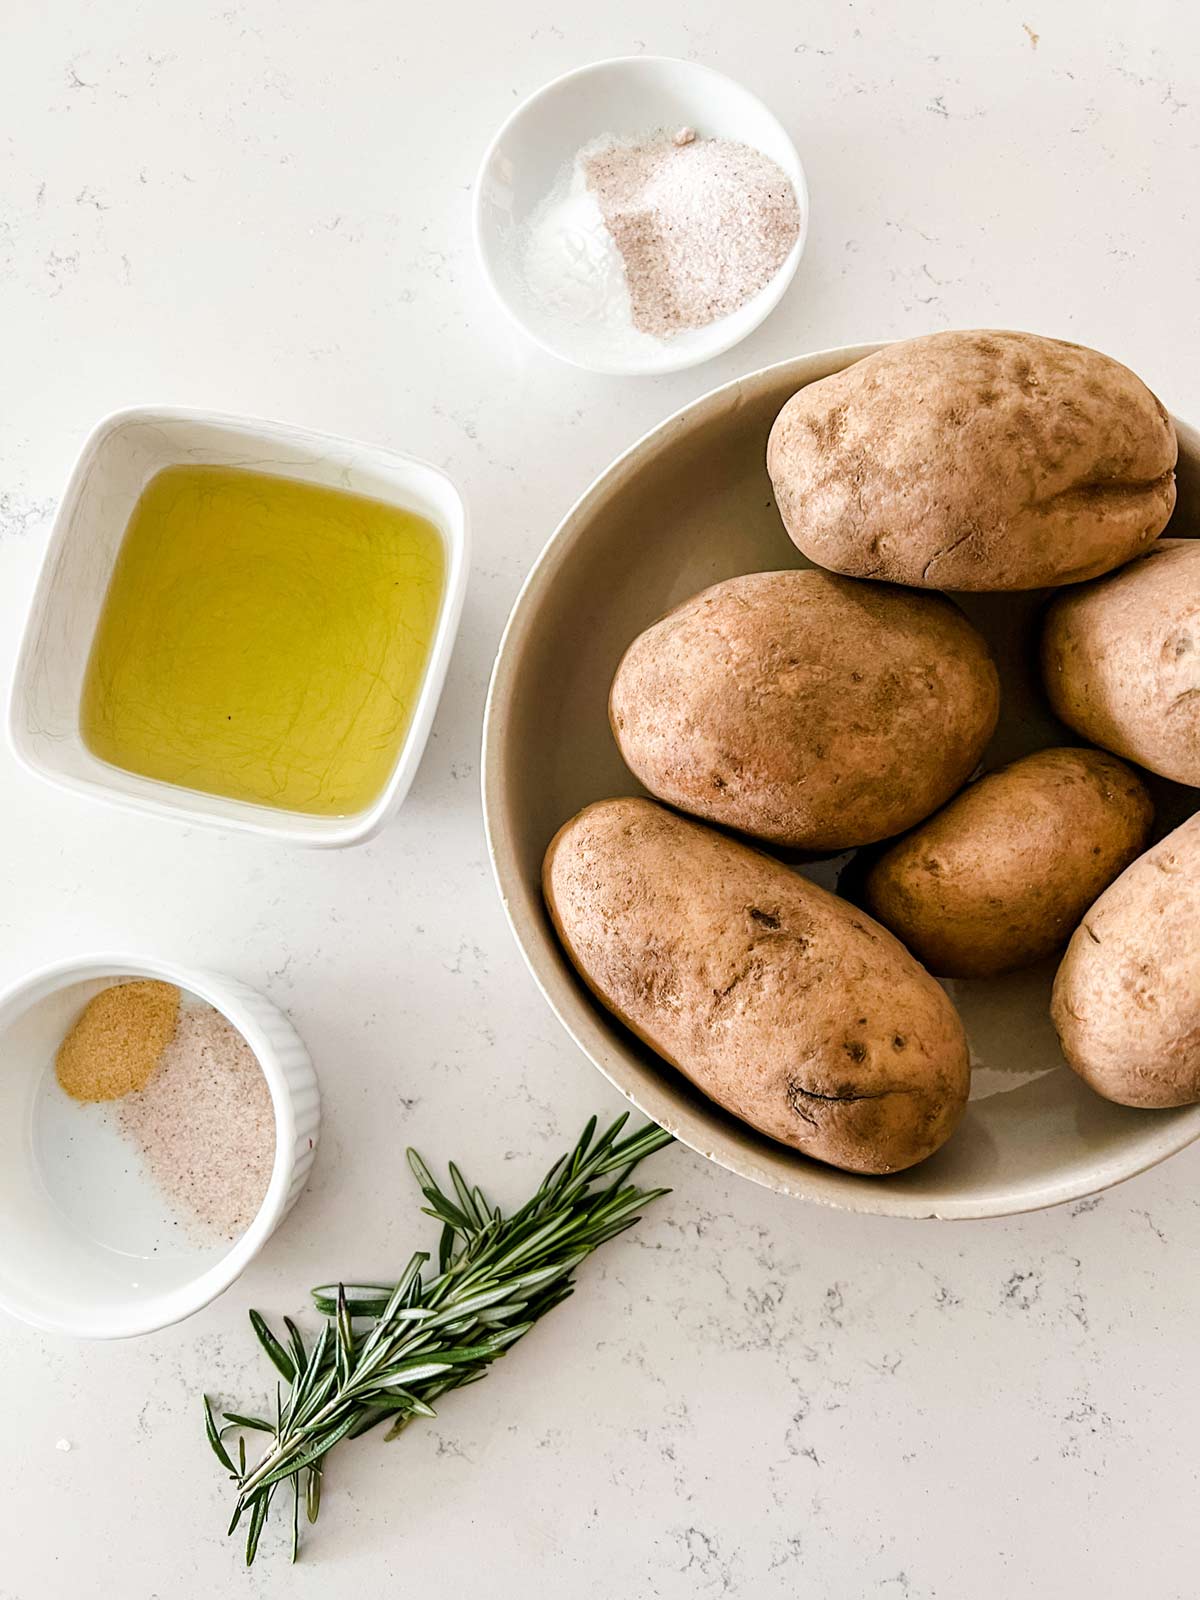 Overhead photo of potatoes, oil, rosemary, baking soda, and seasonings.